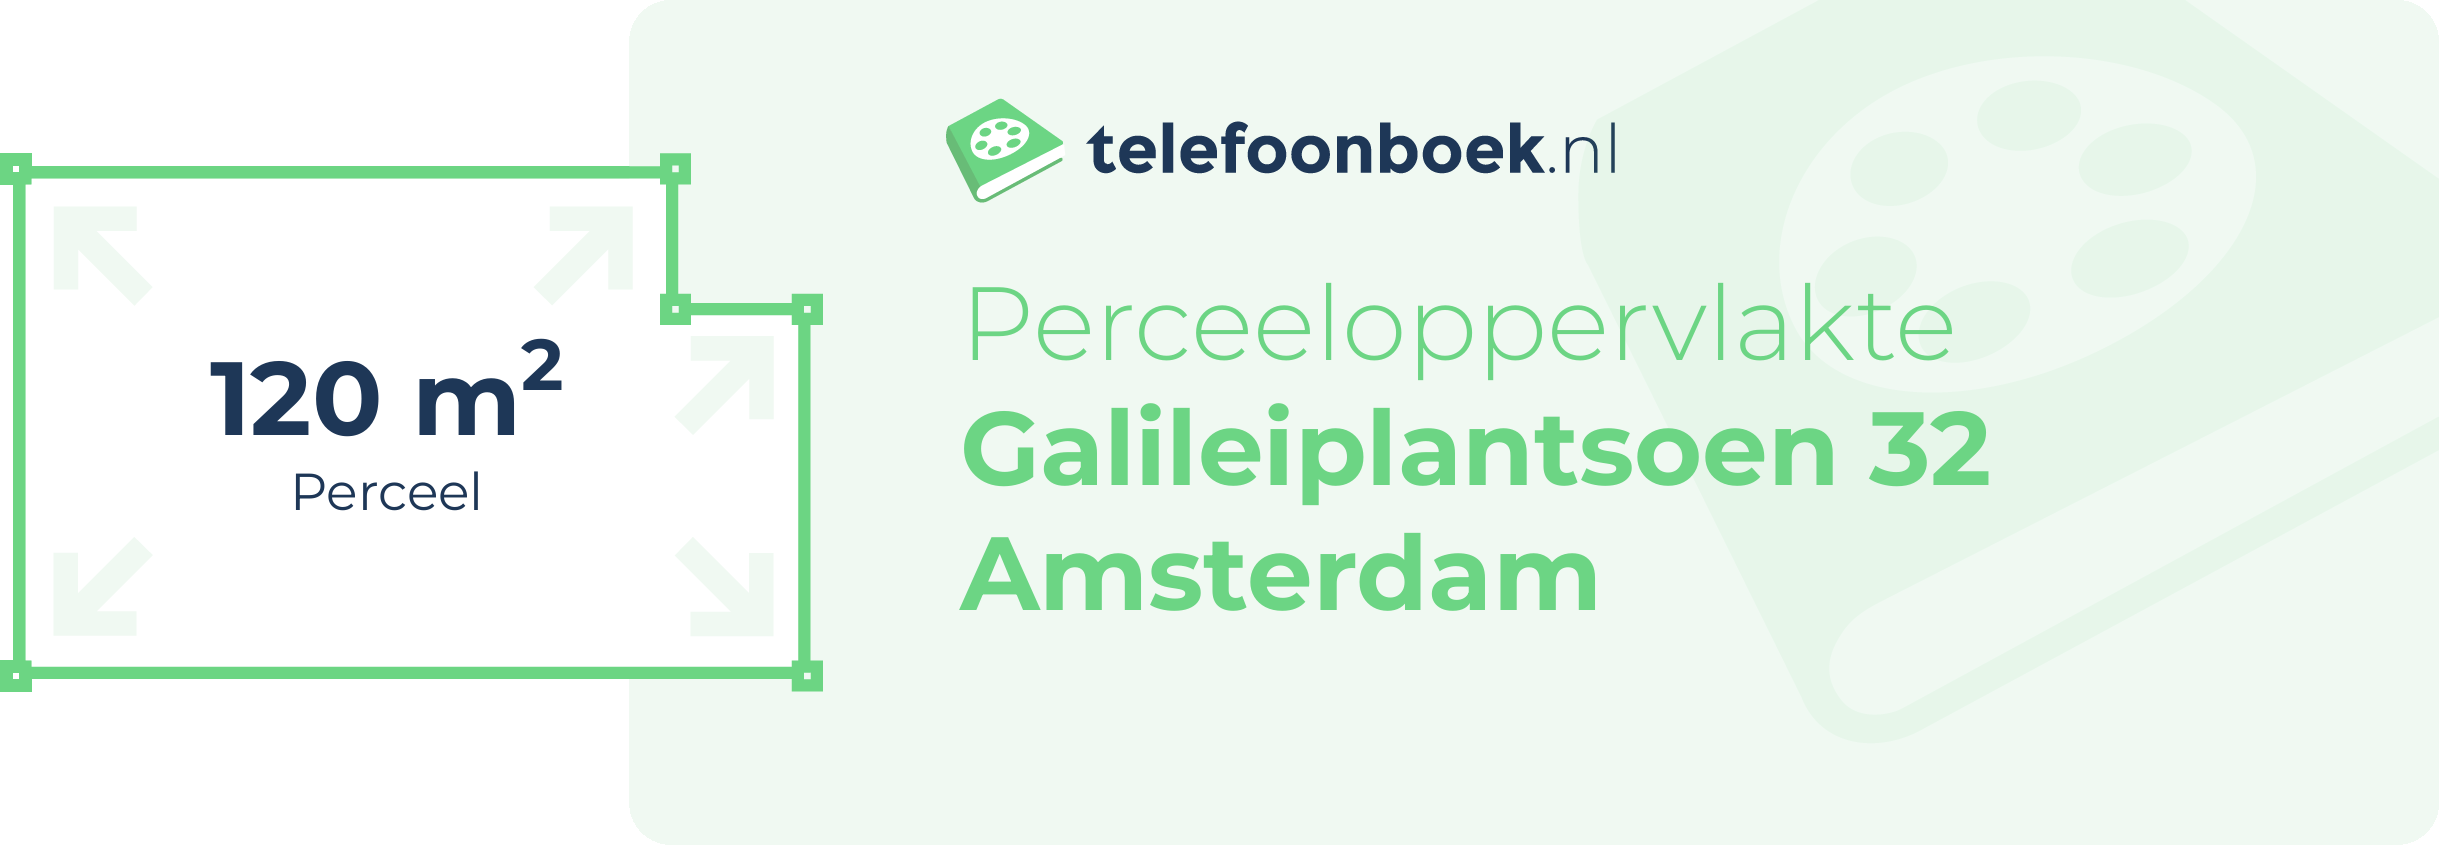 Perceeloppervlakte Galileiplantsoen 32 Amsterdam